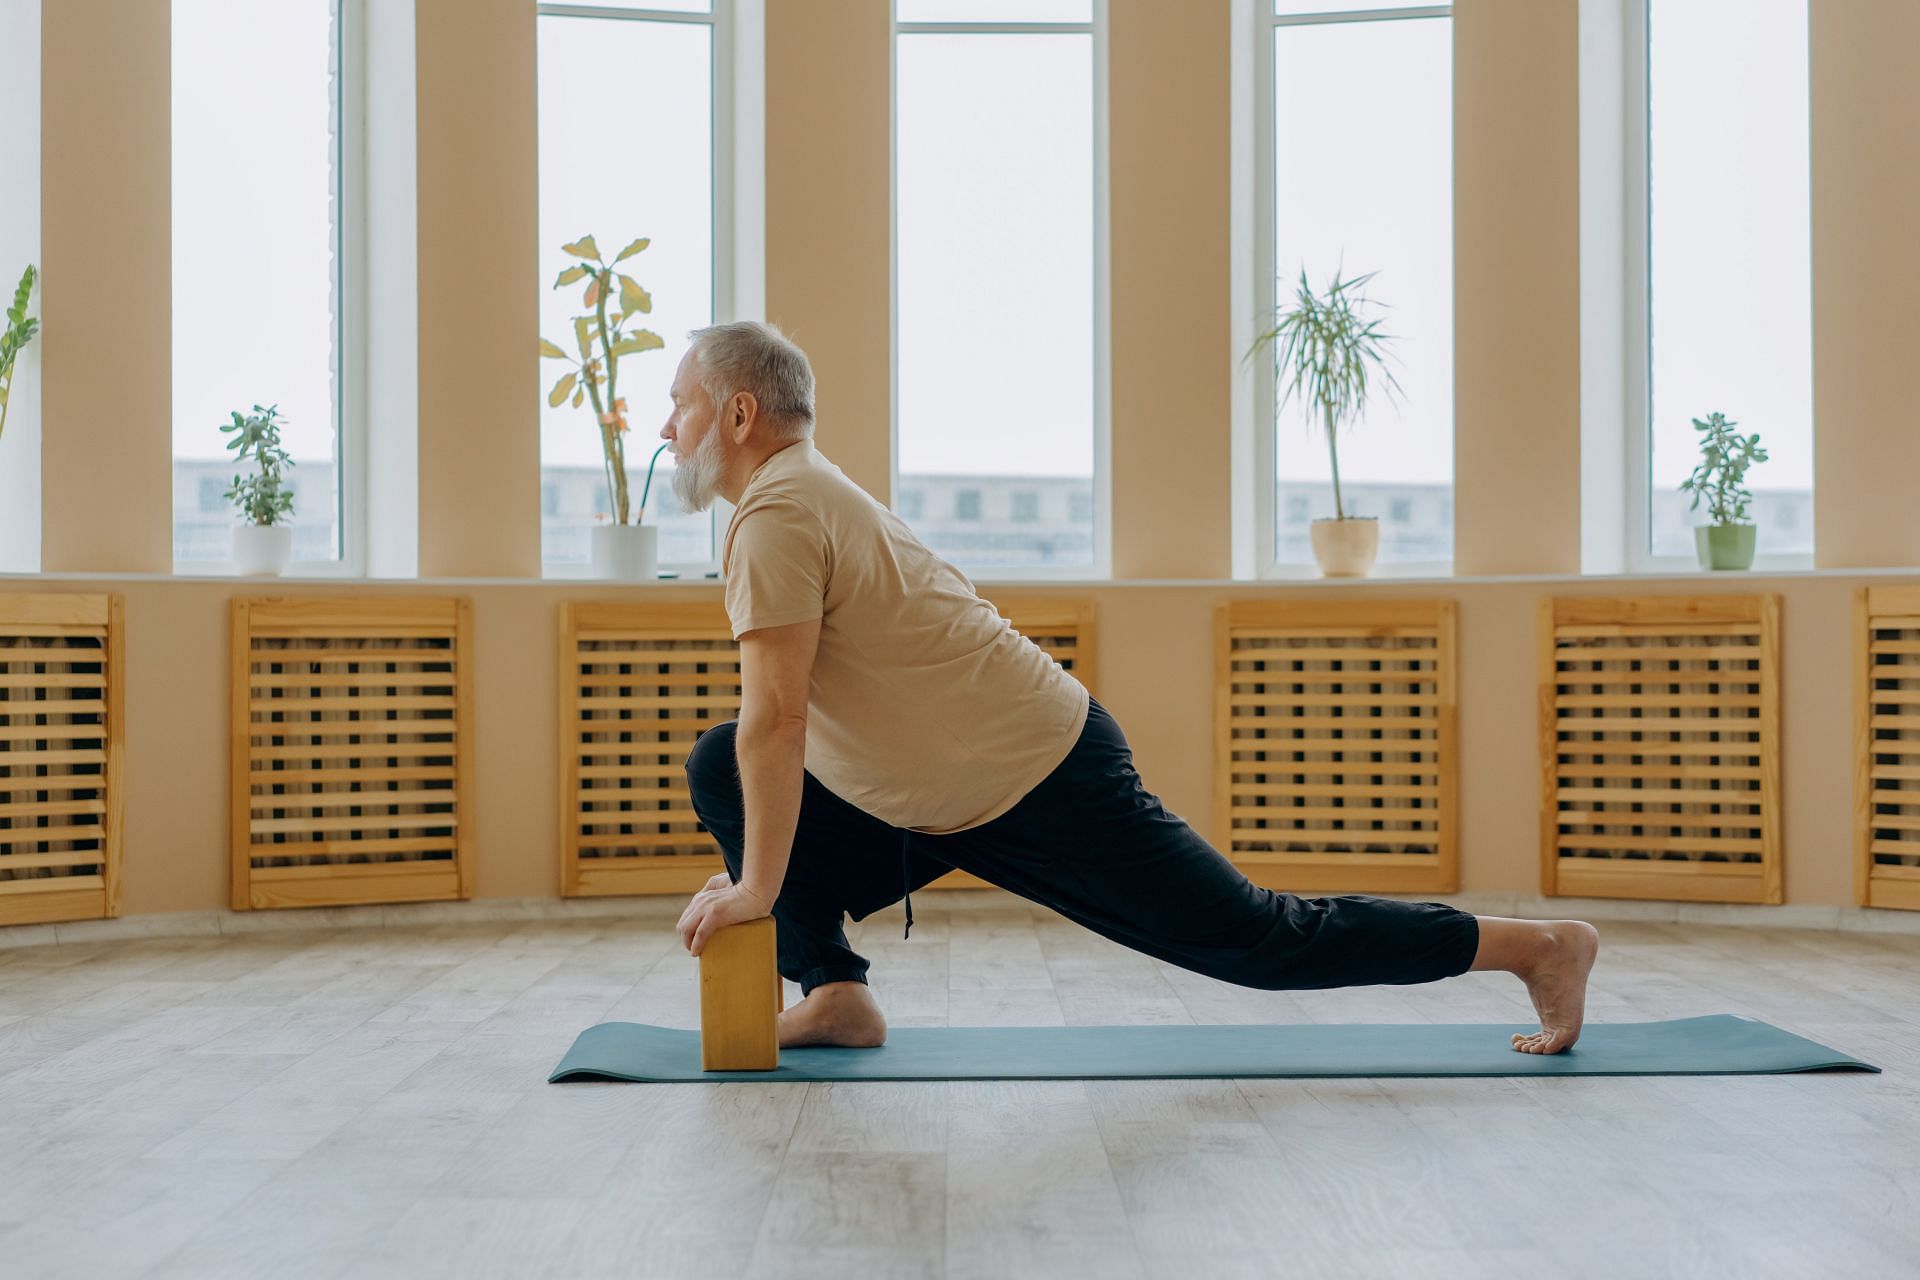 Yoga block can help alleviate your asana practice. (Image via Pexels / Mikhail Nilov)